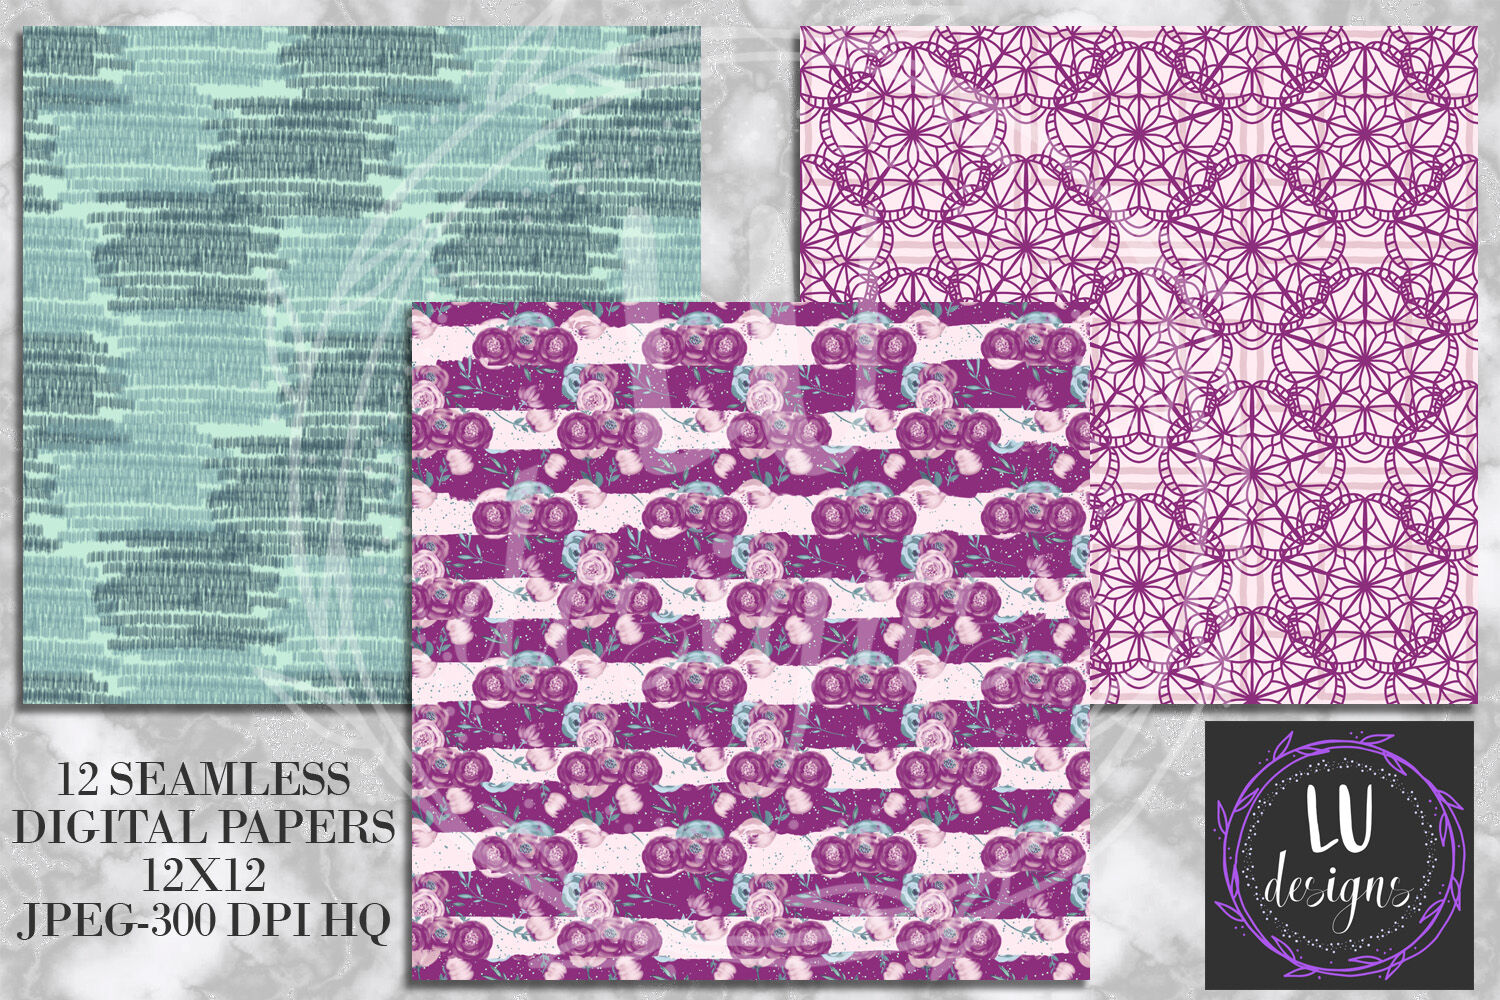 Scrapbook Paper - Purple Watercolor Floral